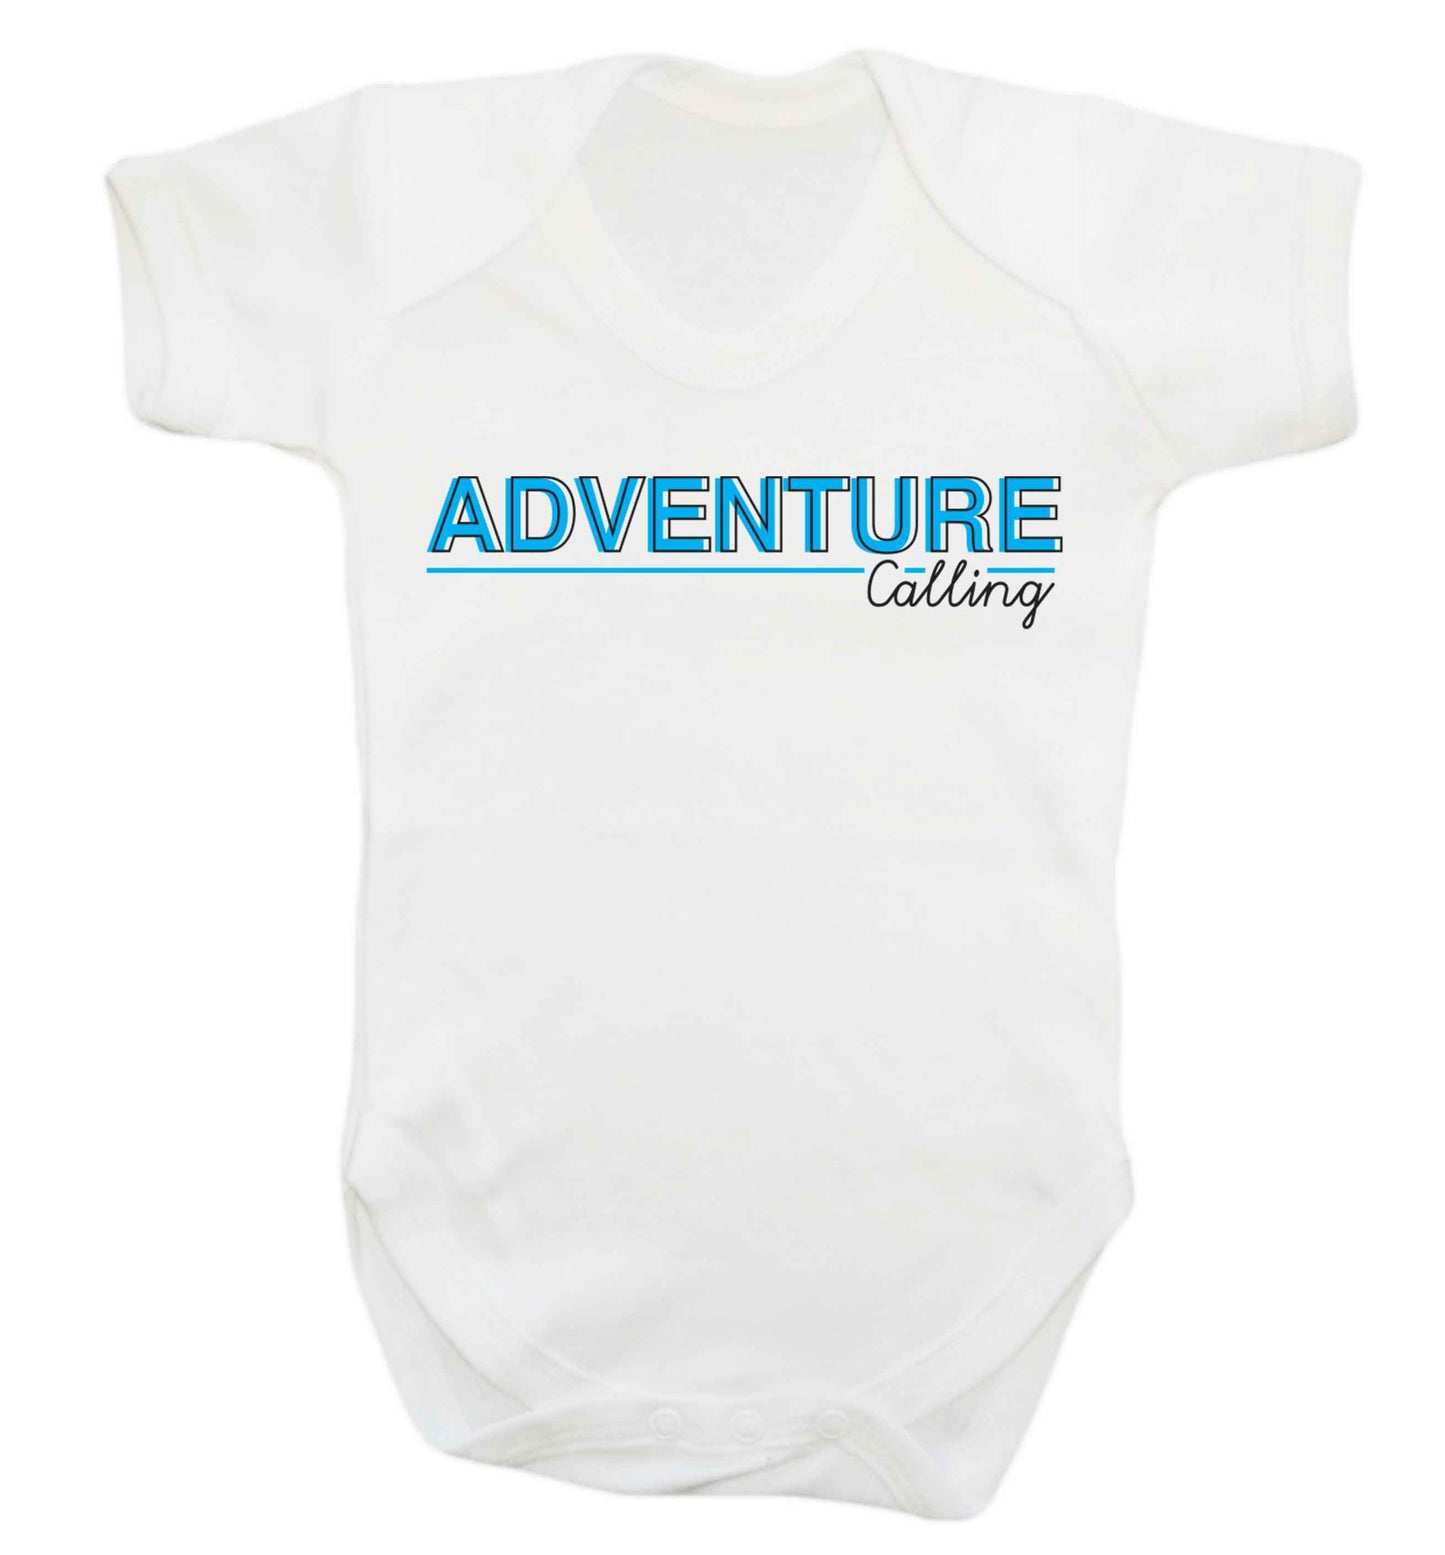 Adventure calling Baby Vest white 18-24 months